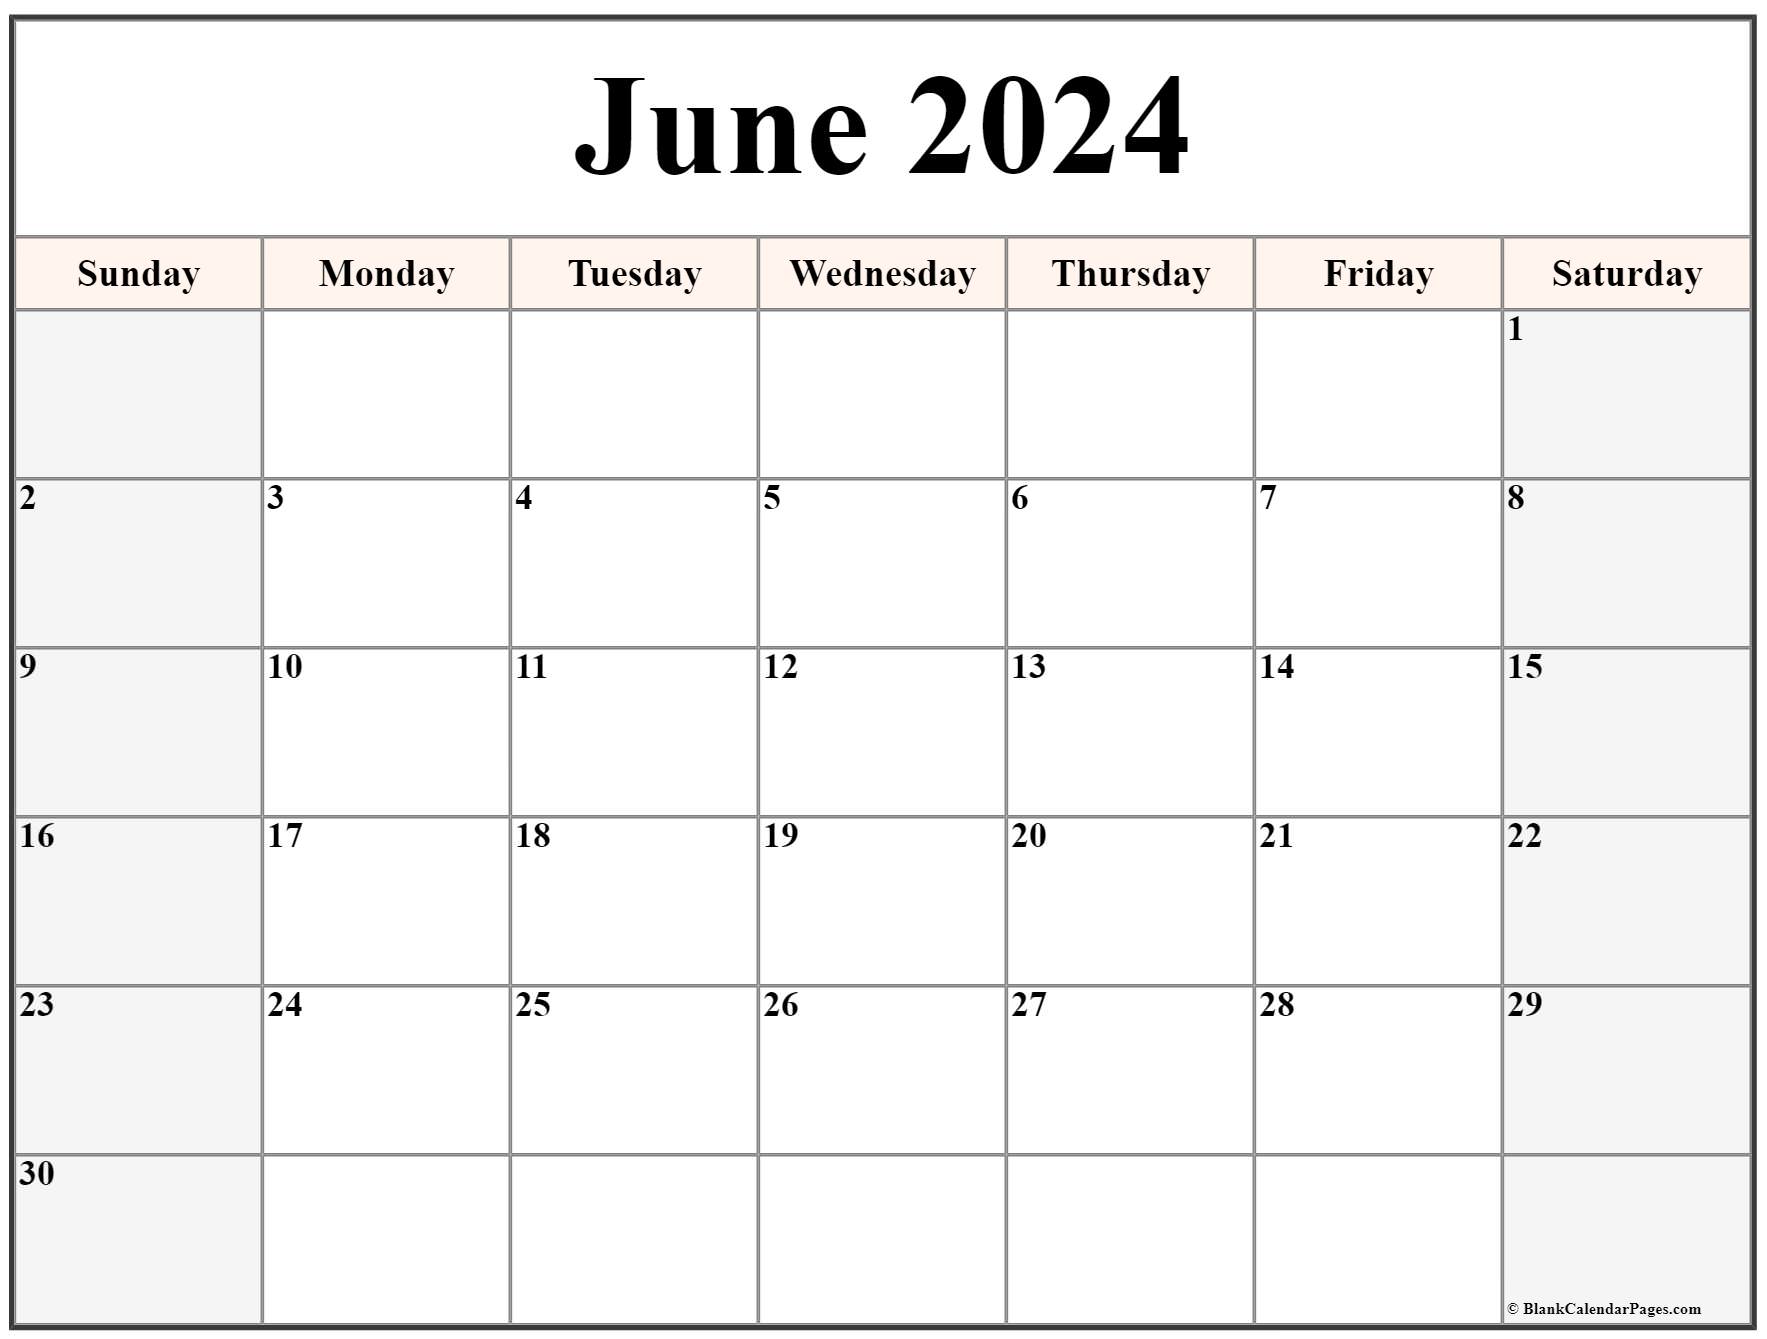 June 2023 Calendar June 2023 Vrat Tyohar Hindu Festival 2023 2023 Cekicrot21 Gambaran